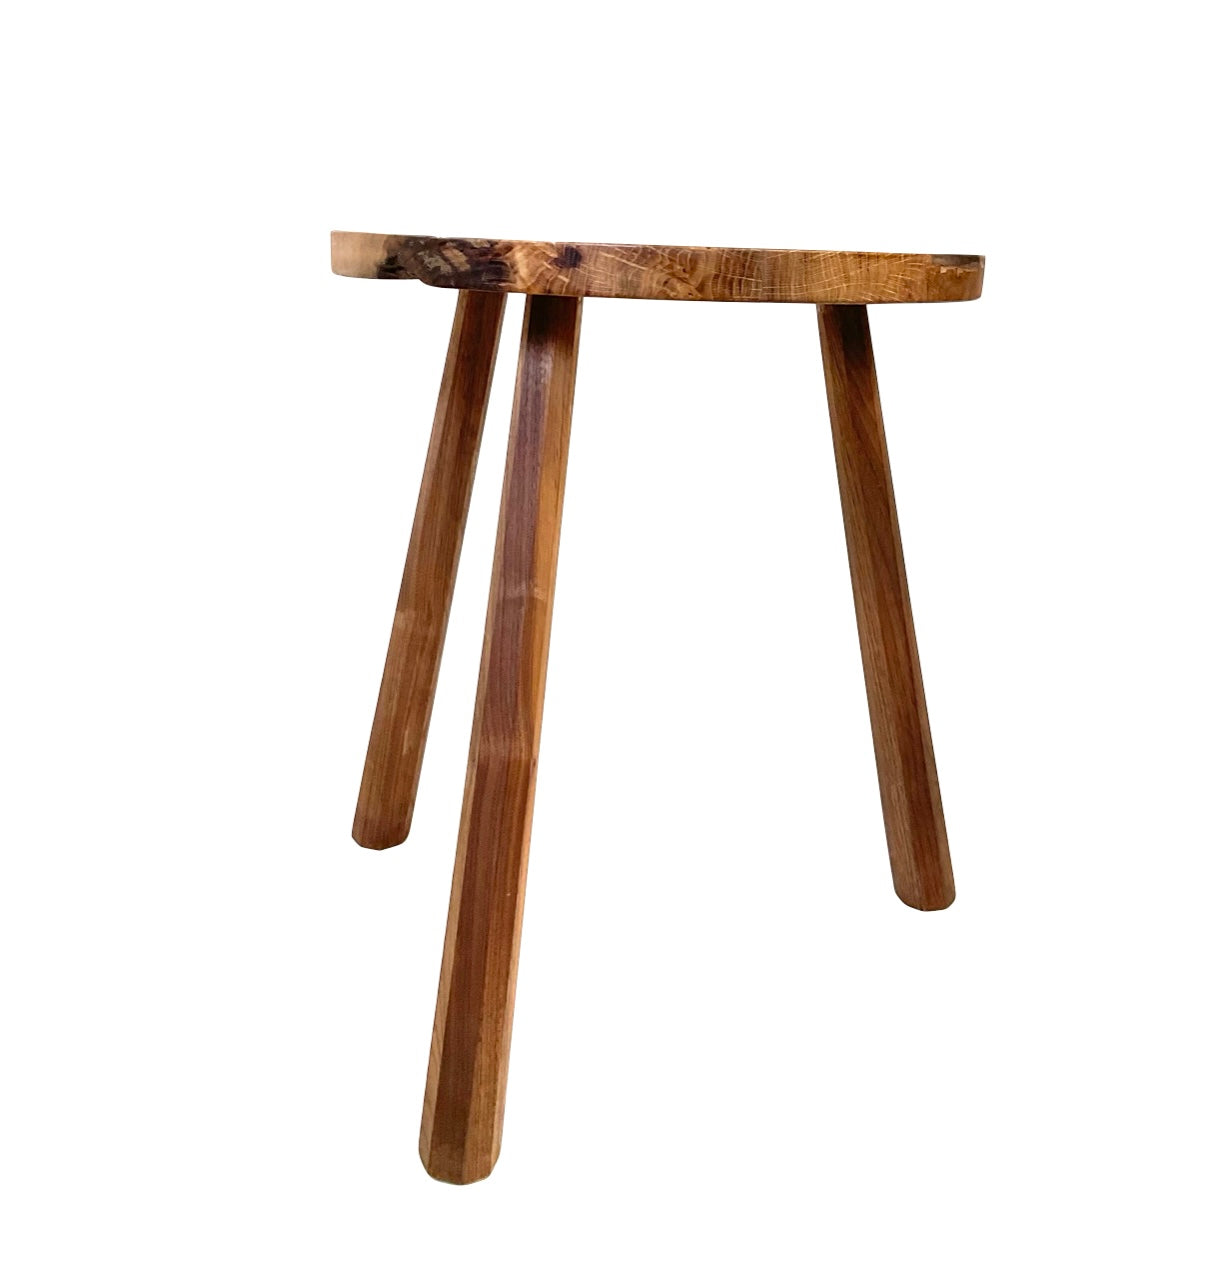 Low English oak stool / side table